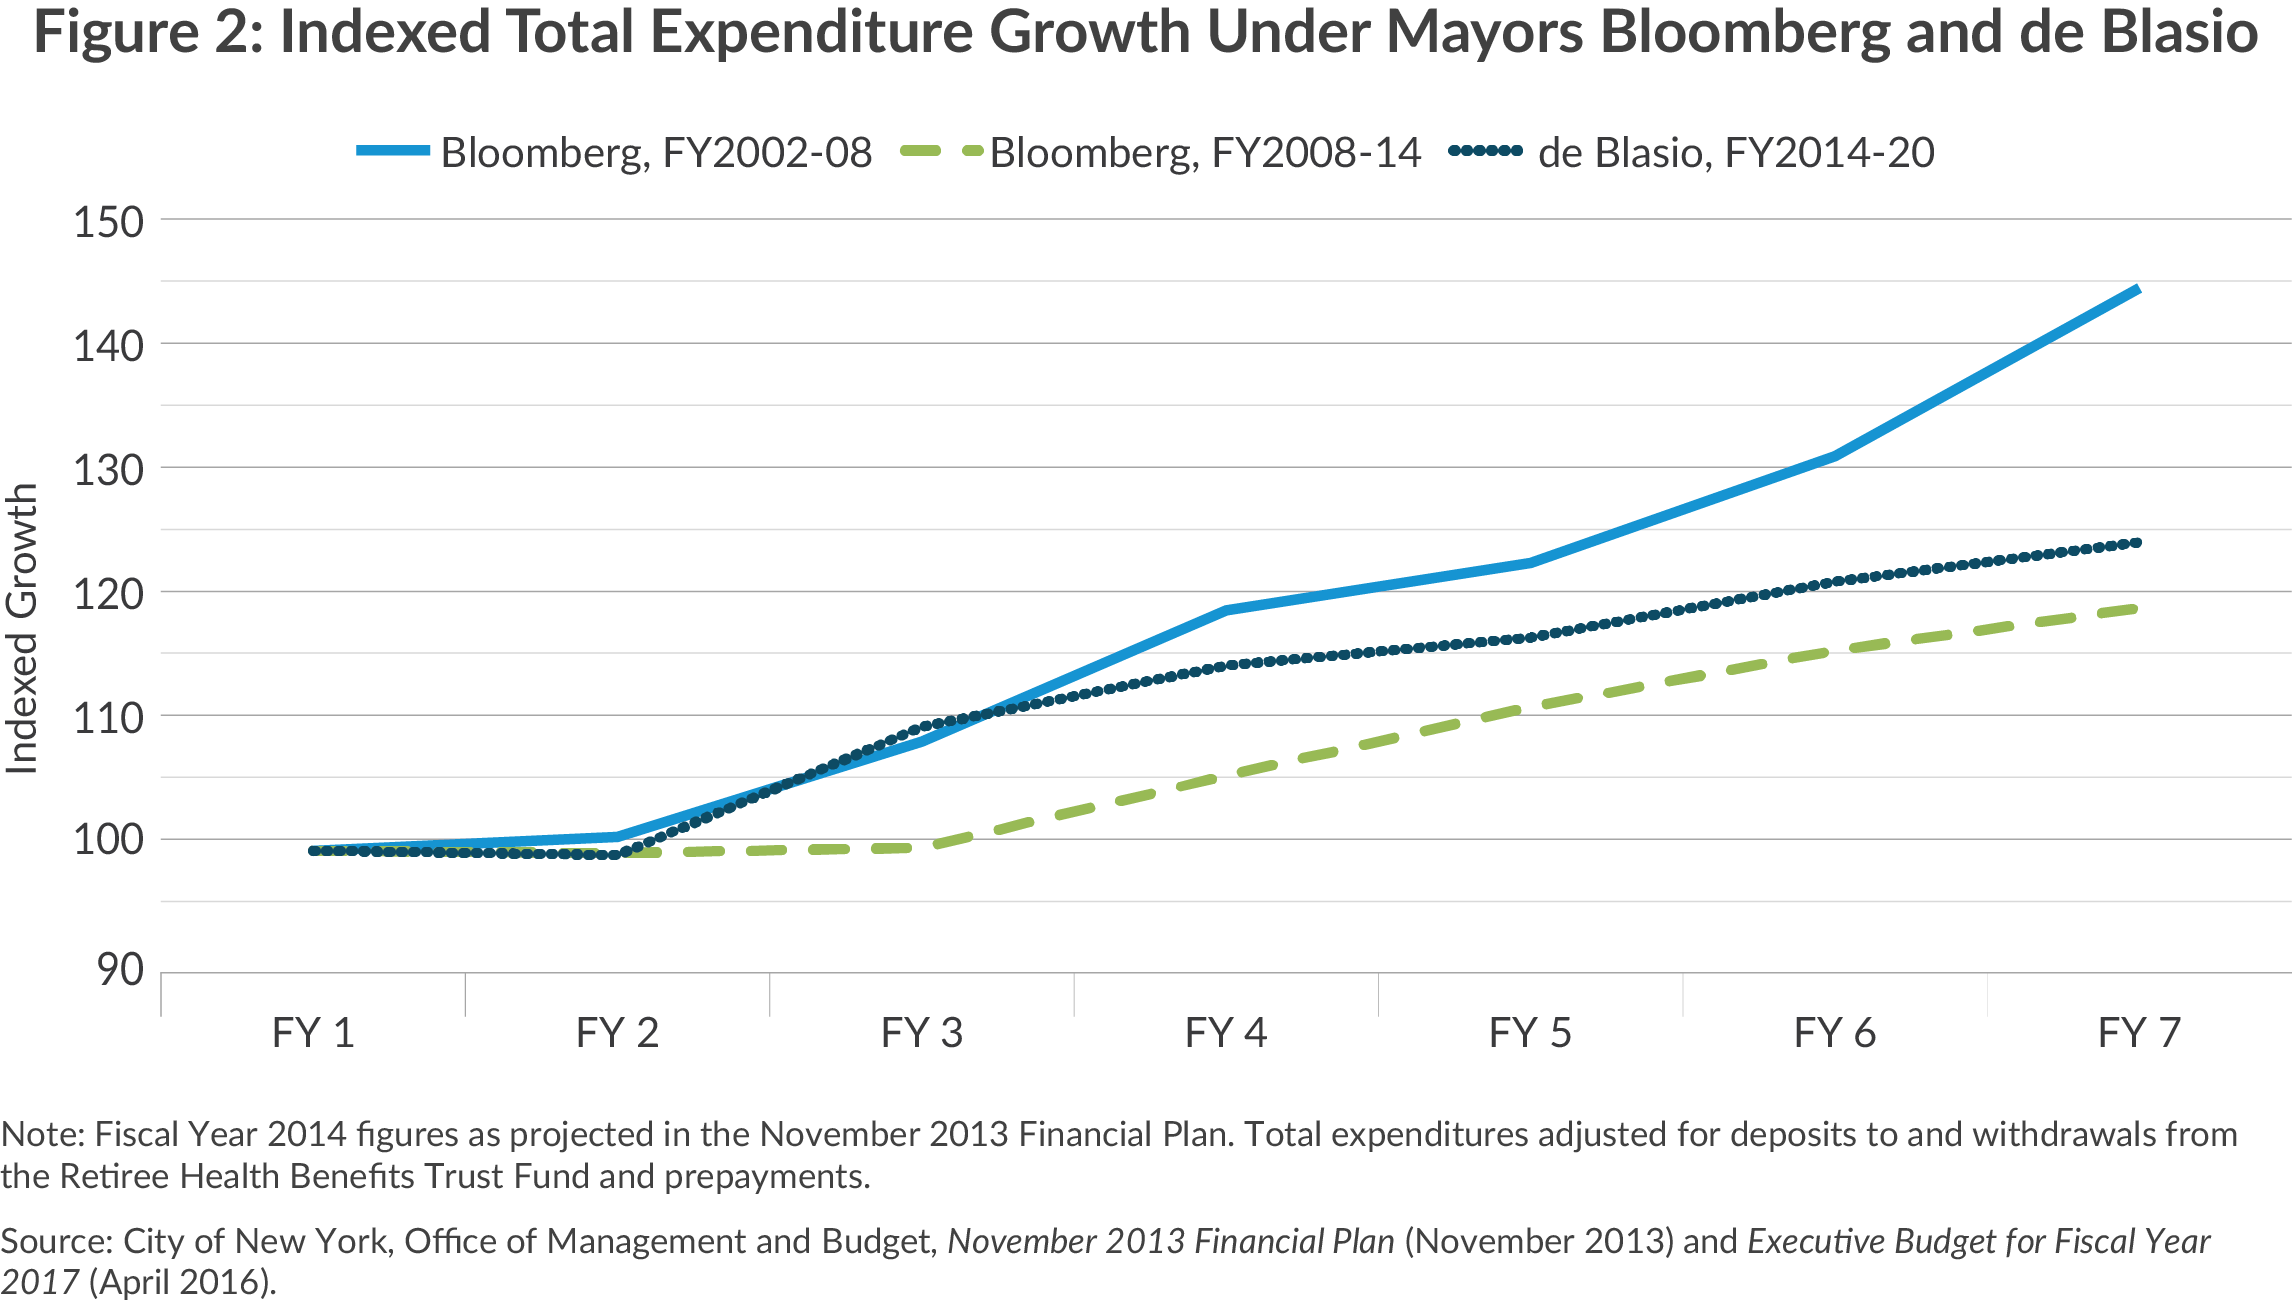 Expenditure Growth, Bloomberg vs. de Blasio